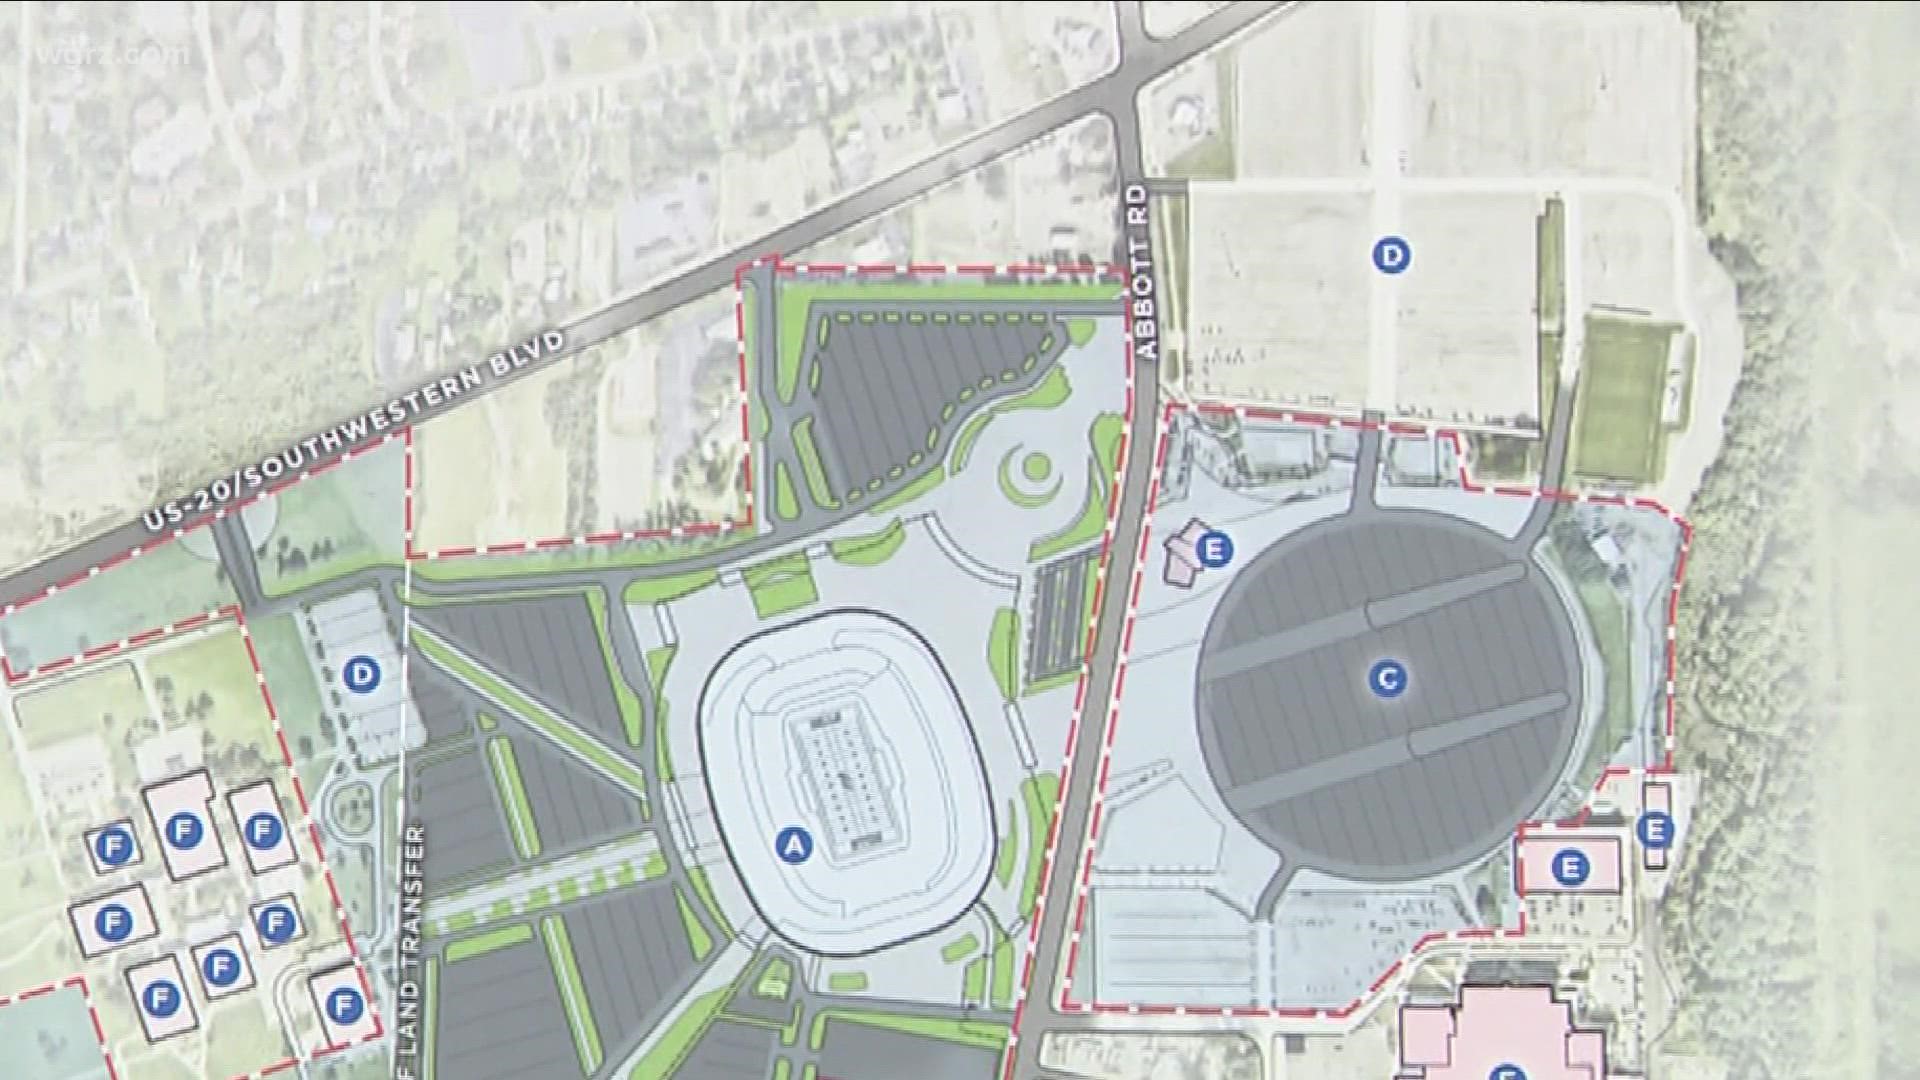 Bills stadium site plans and public opinion